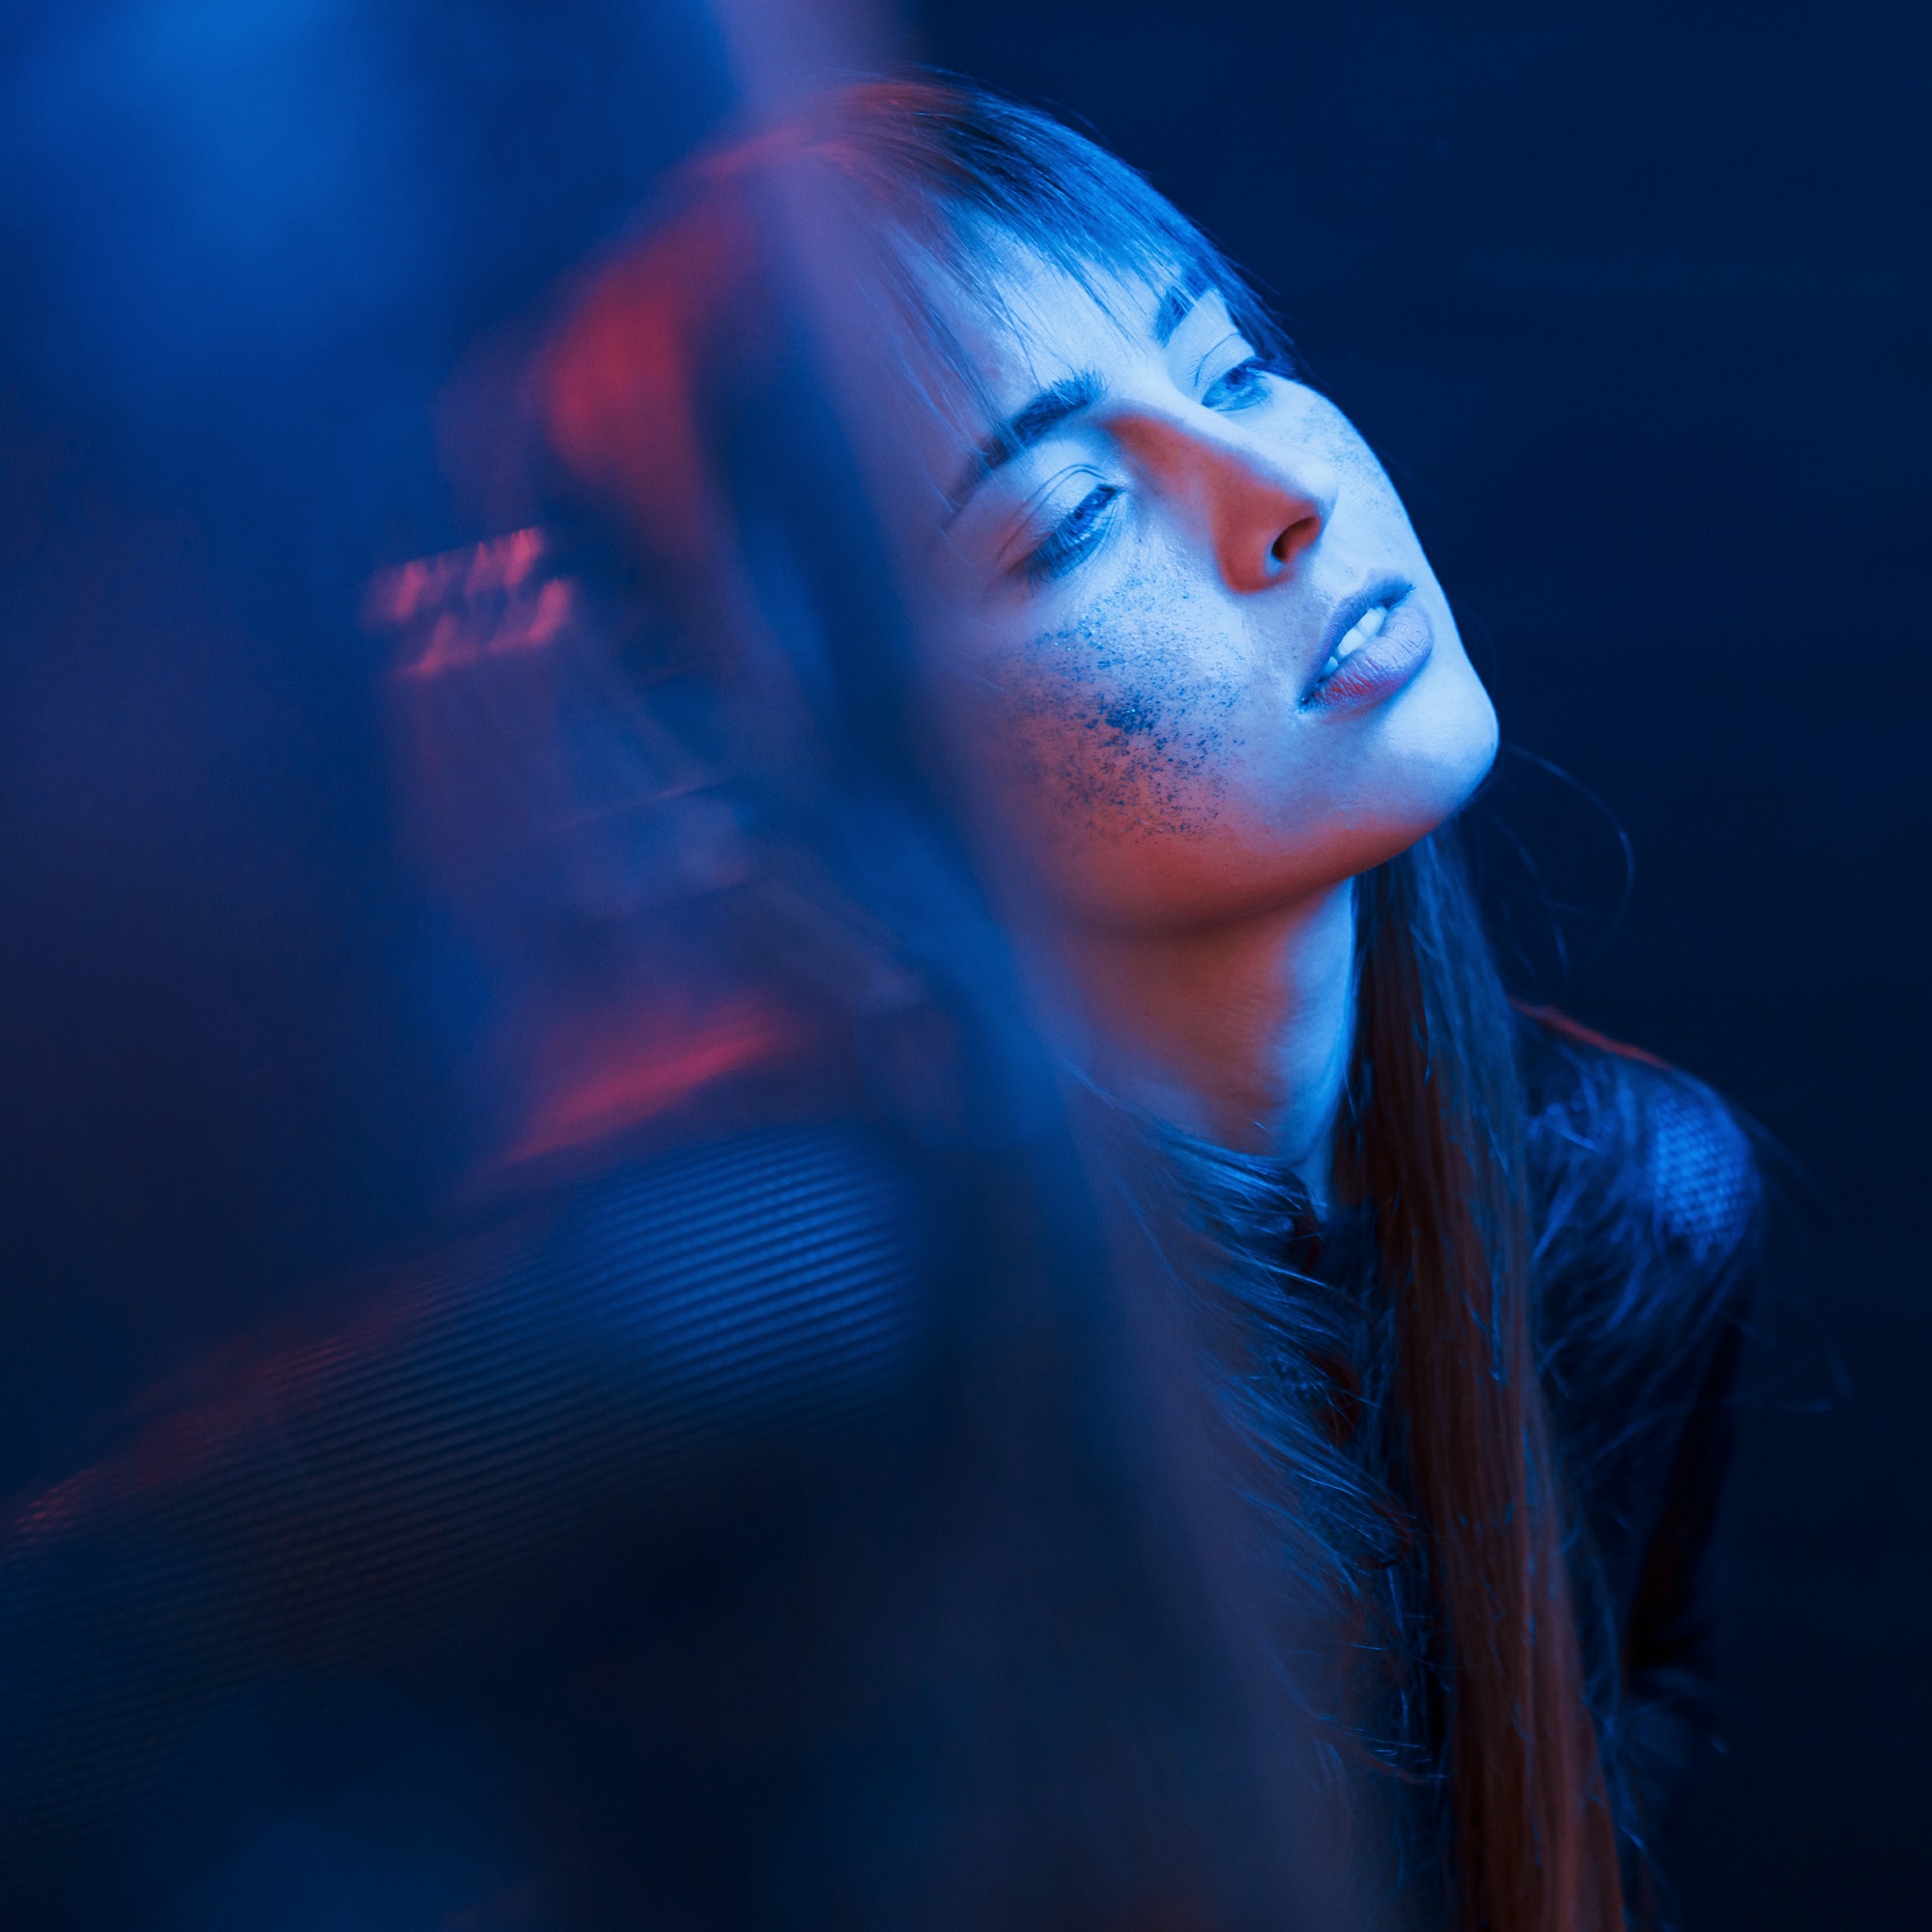 sensuality-and-enjoyment-studio-shot-in-dark-studio-with-neon-light-portrait-of-young-girl.jpg